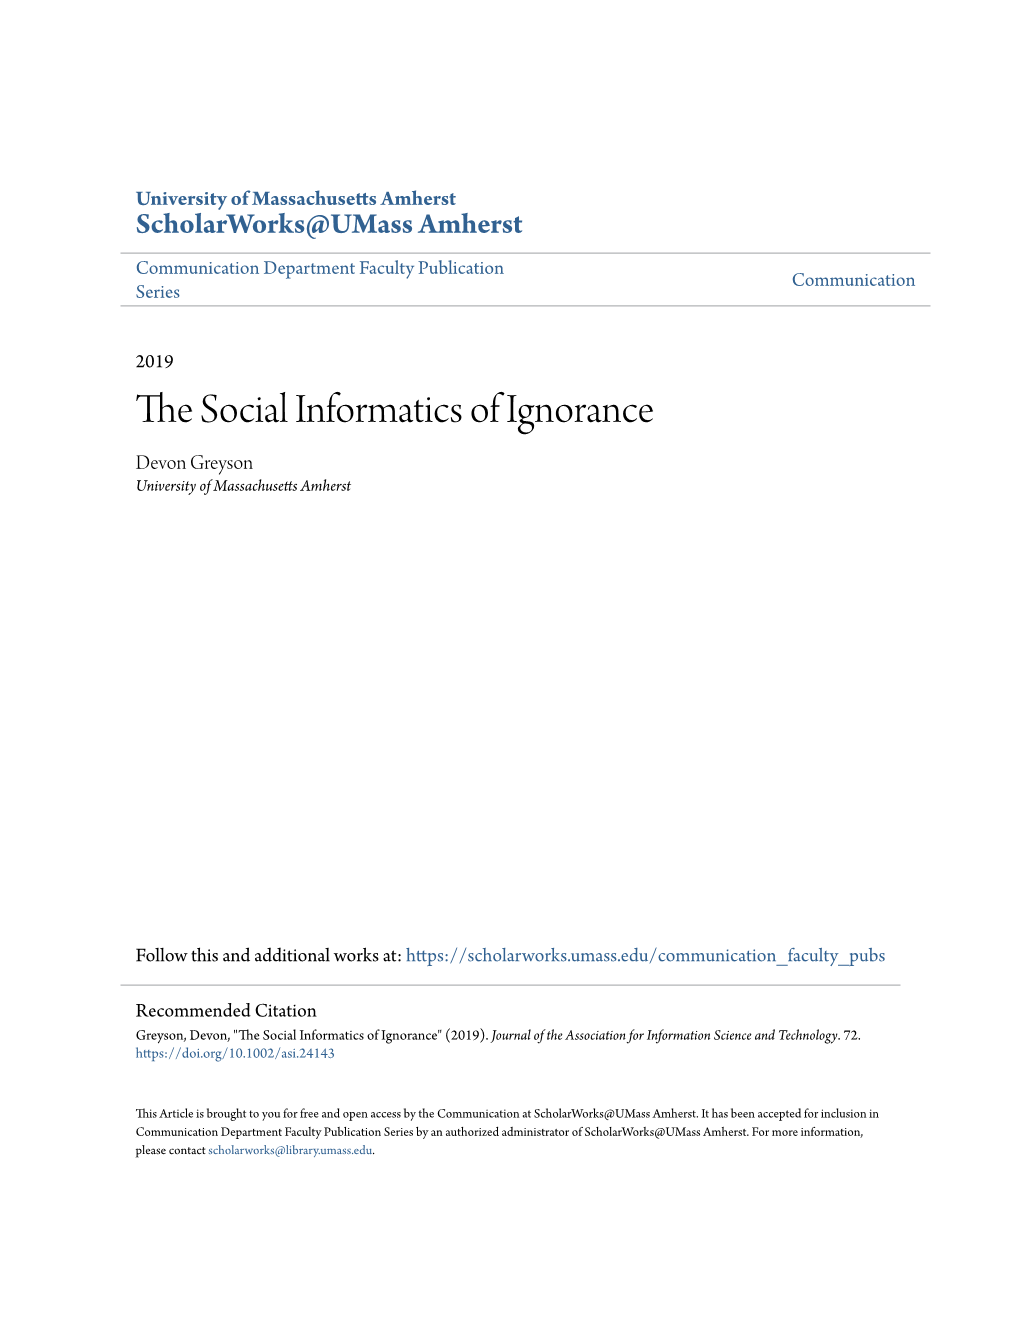 The Social Informatics of Ignorance